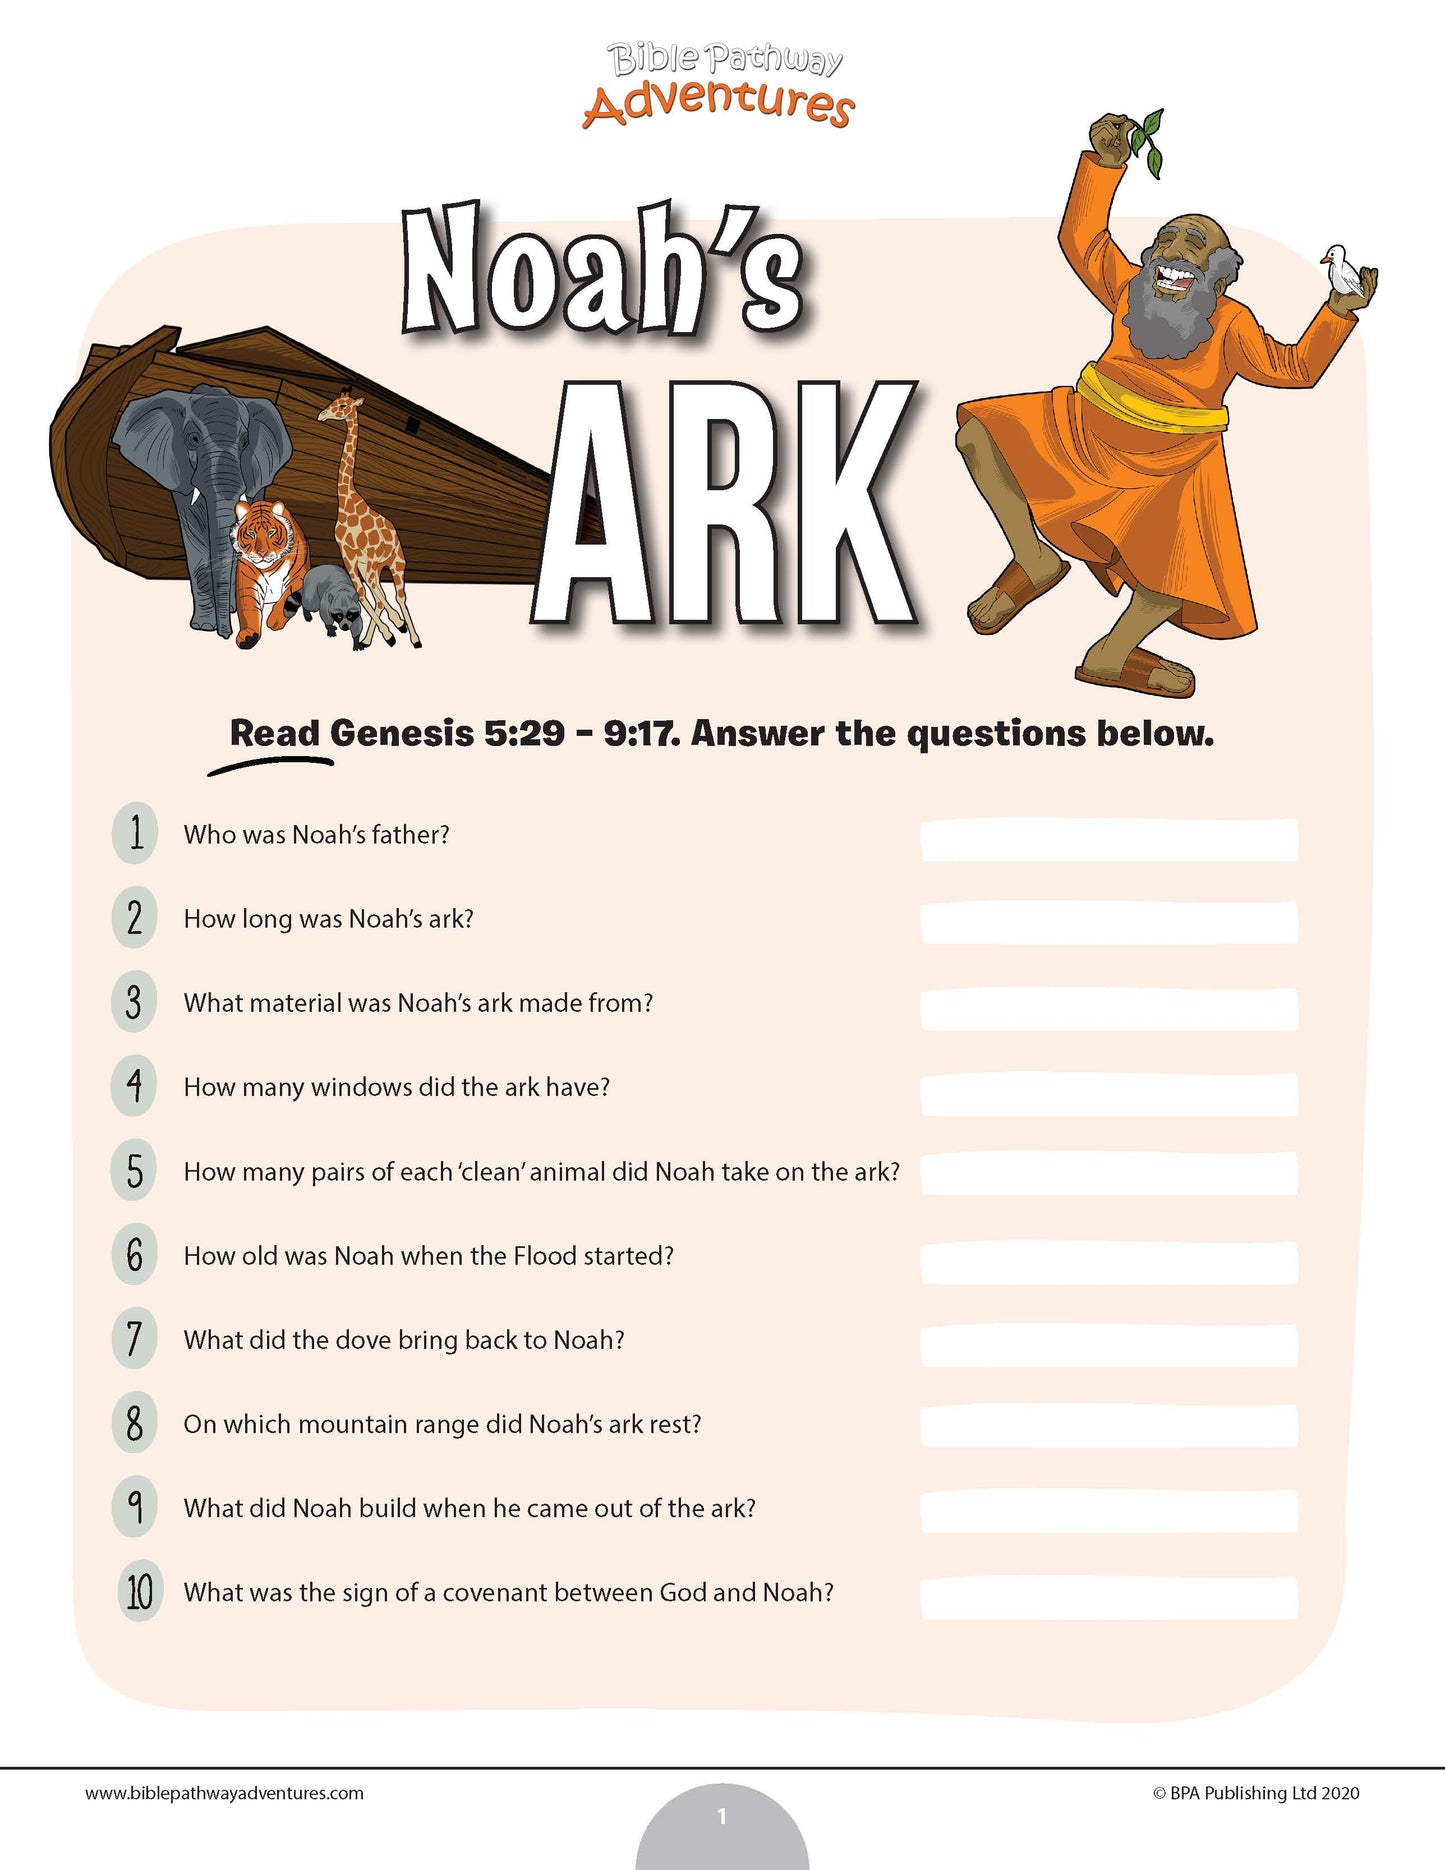 Noah's Ark quiz